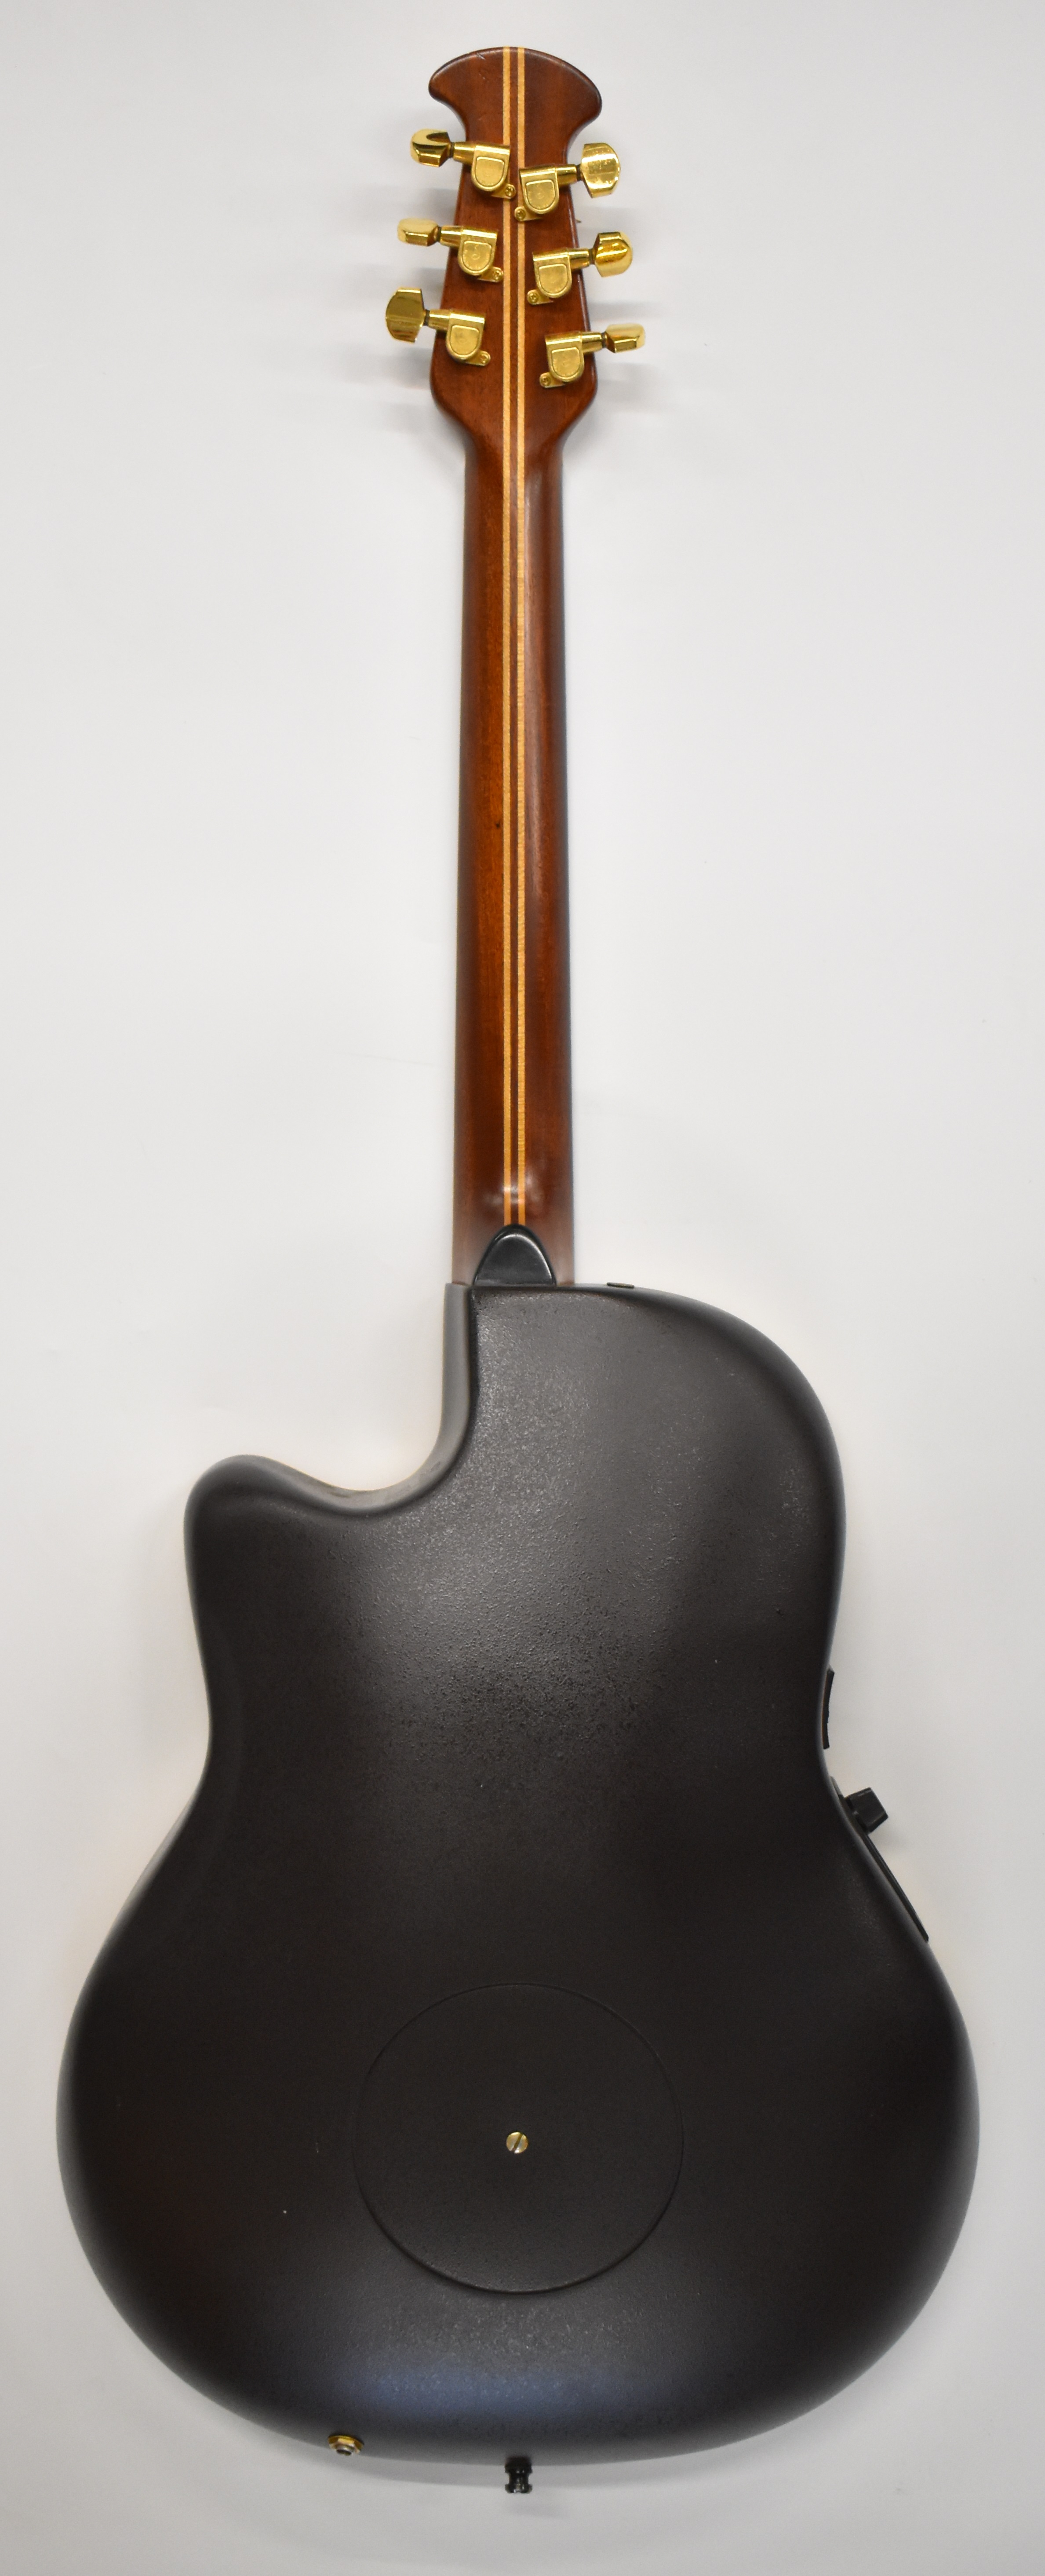 Ovation Elite electro acoustic guitar model number 1868C, with hard case. - Image 6 of 9